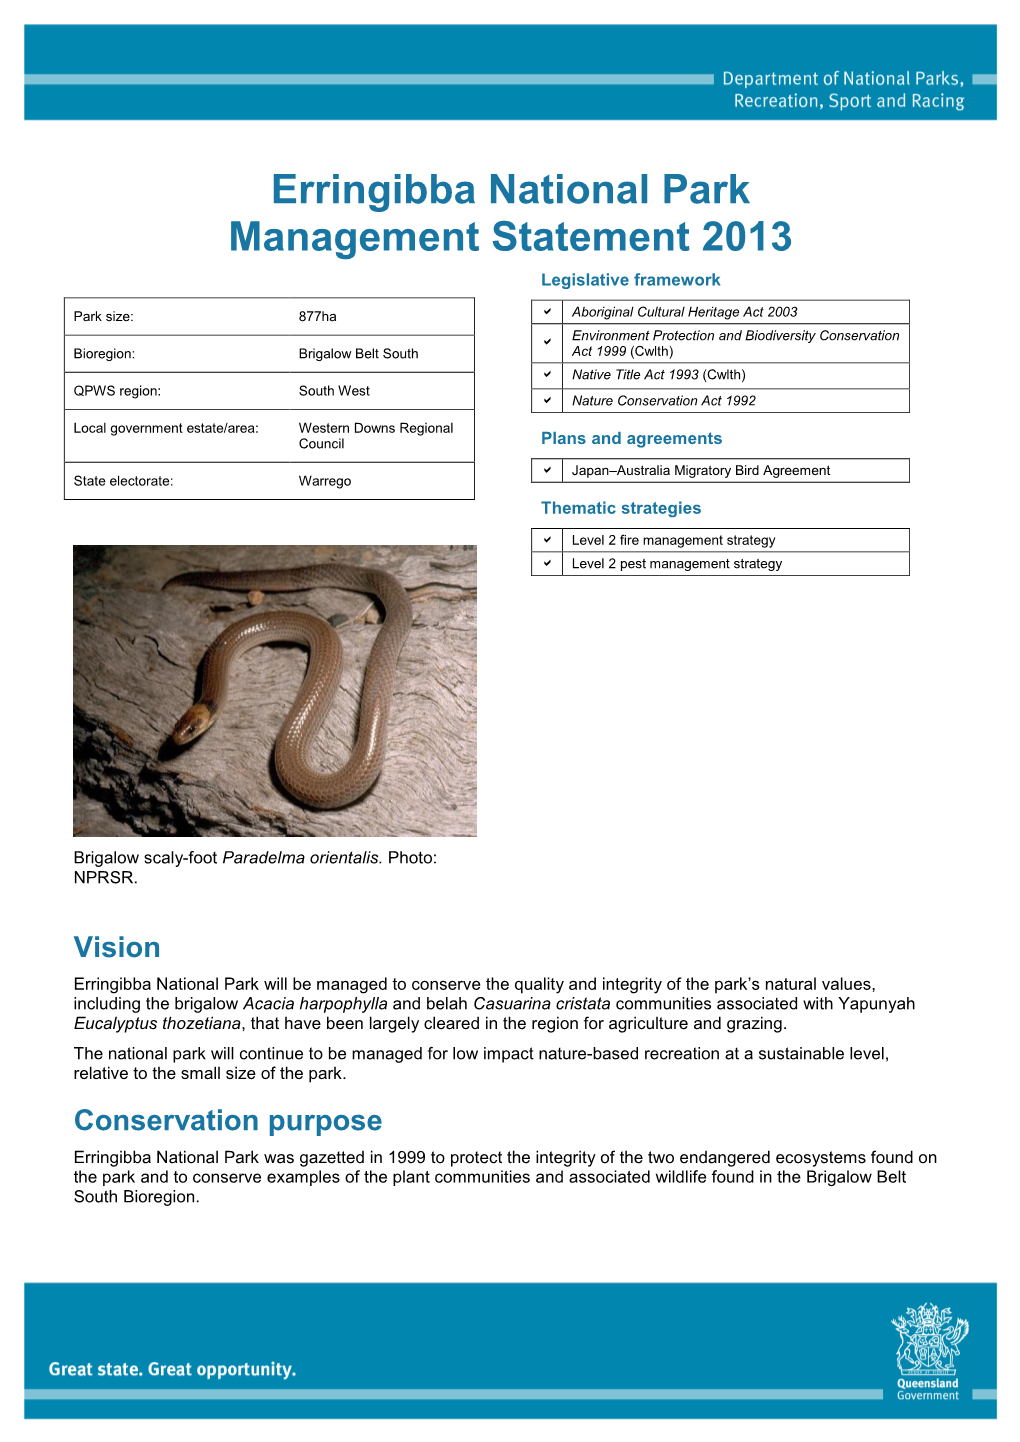 Erringibba National Park Management Statement 2013 (PDF, 271.9